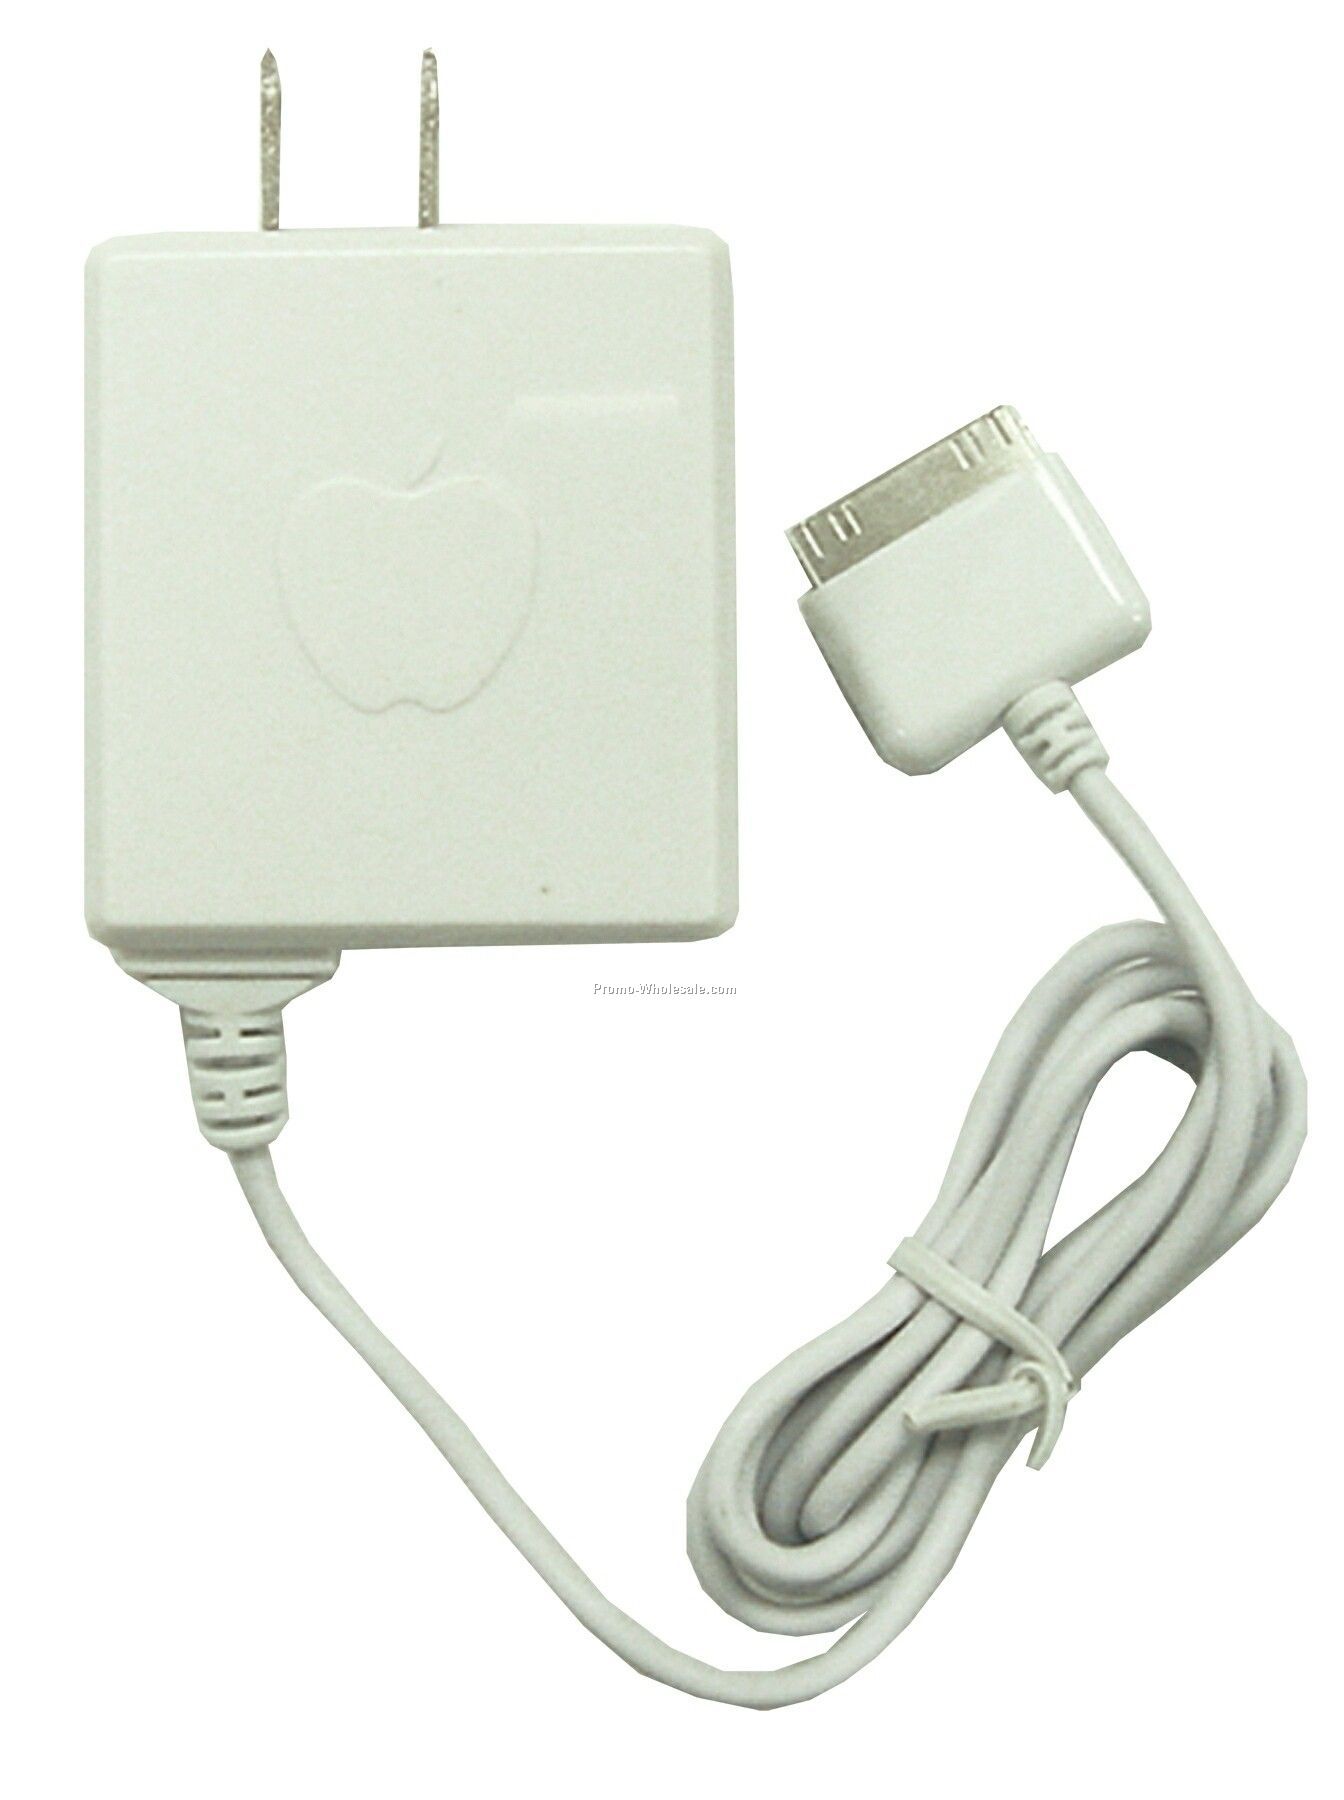 Ipod Adapter Plug